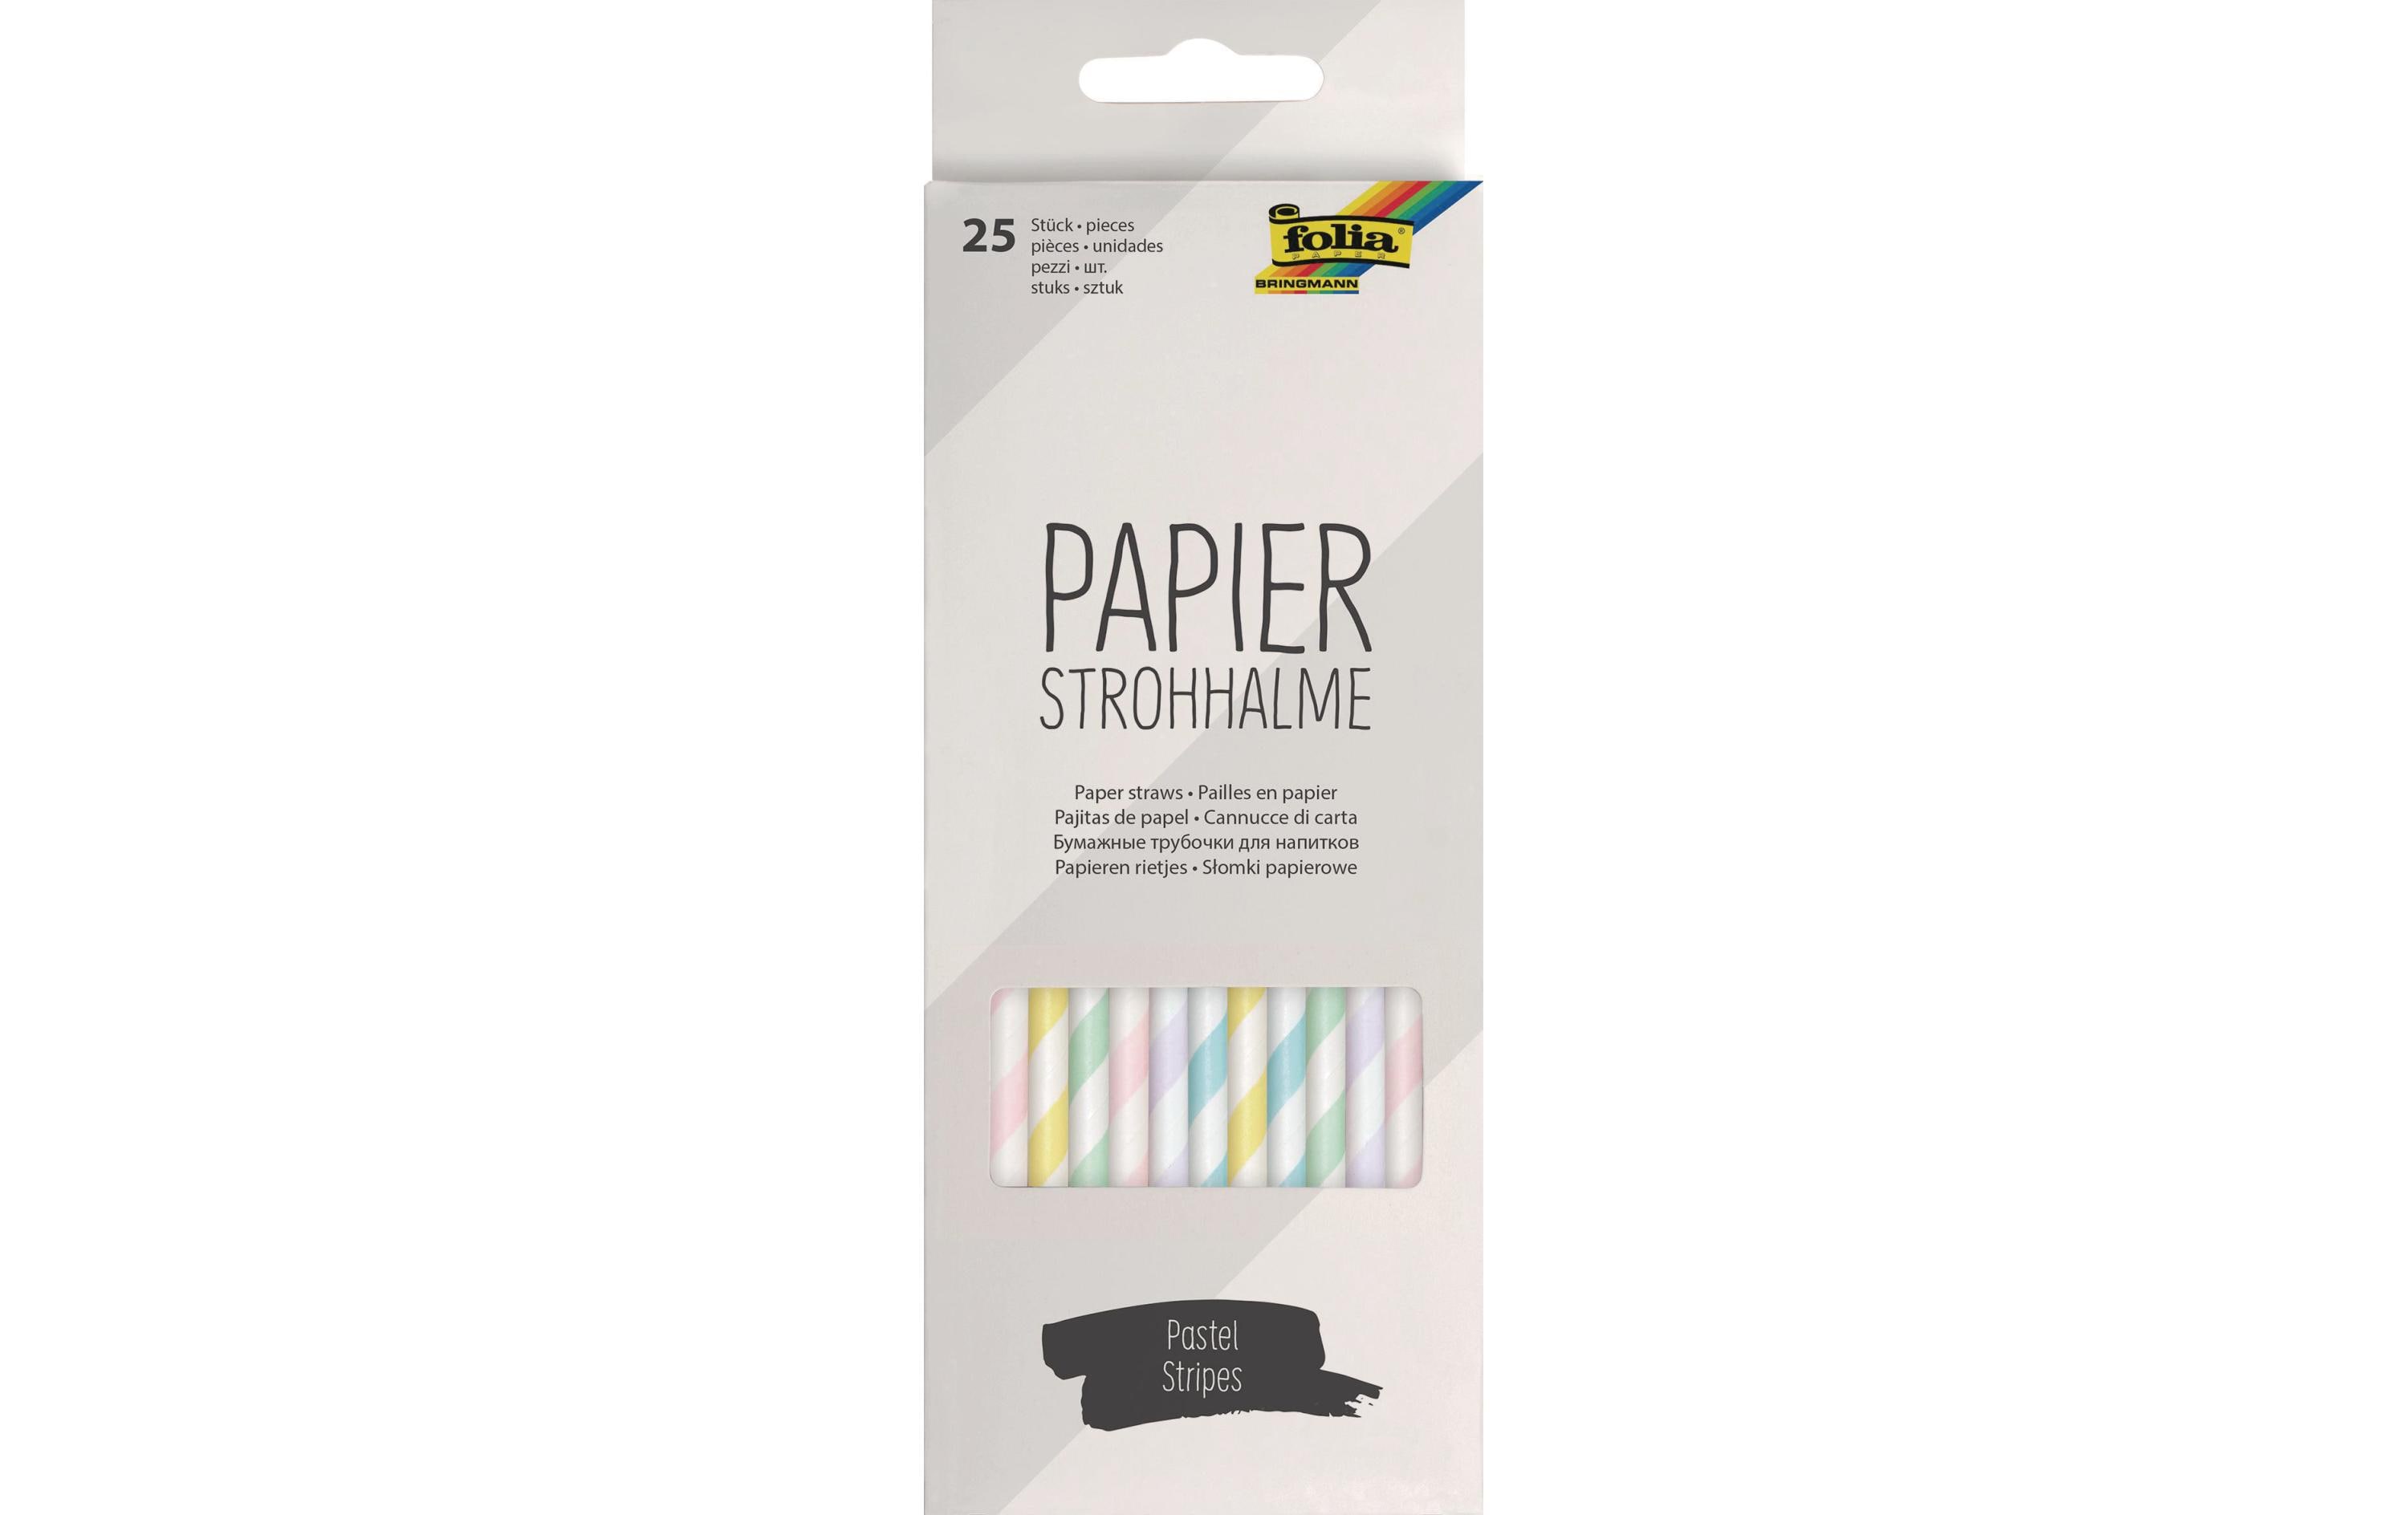 Folia Strohhalm Papier, 25 Stück, Pastell Streifen